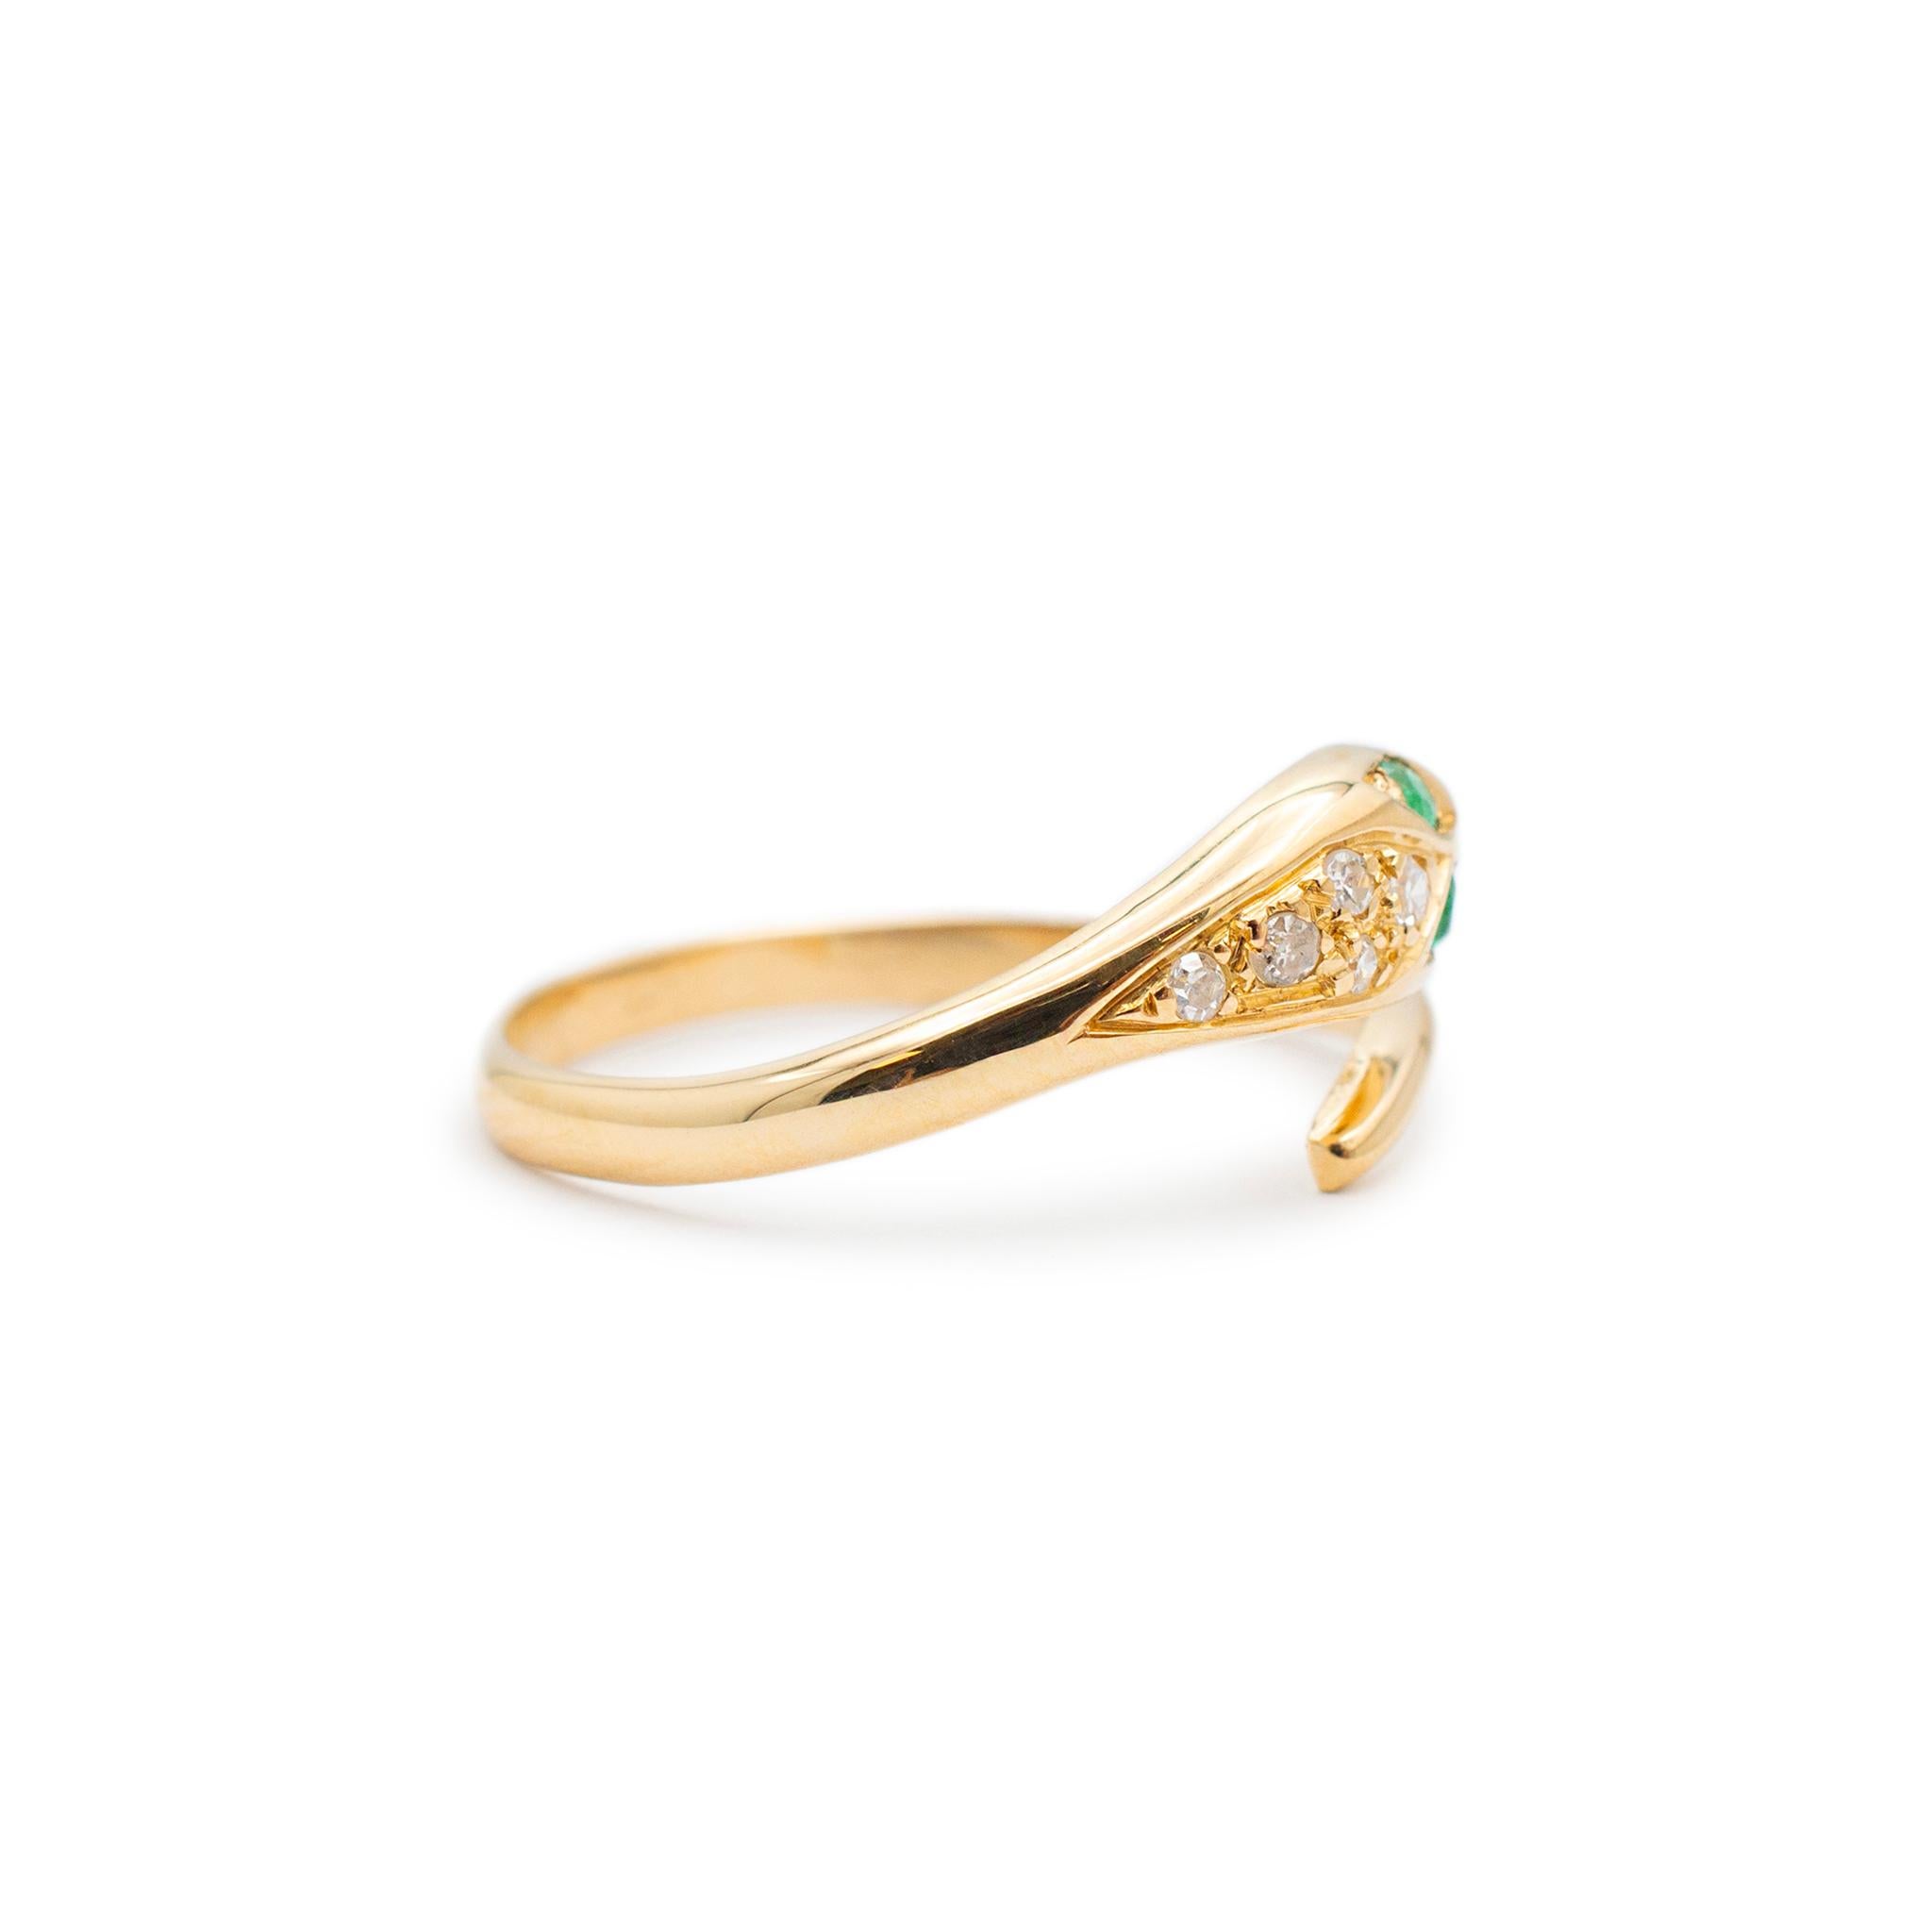 Round Cut Ladies 18K Yellow Gold Emerald & Diamond Snake Cocktail Ring